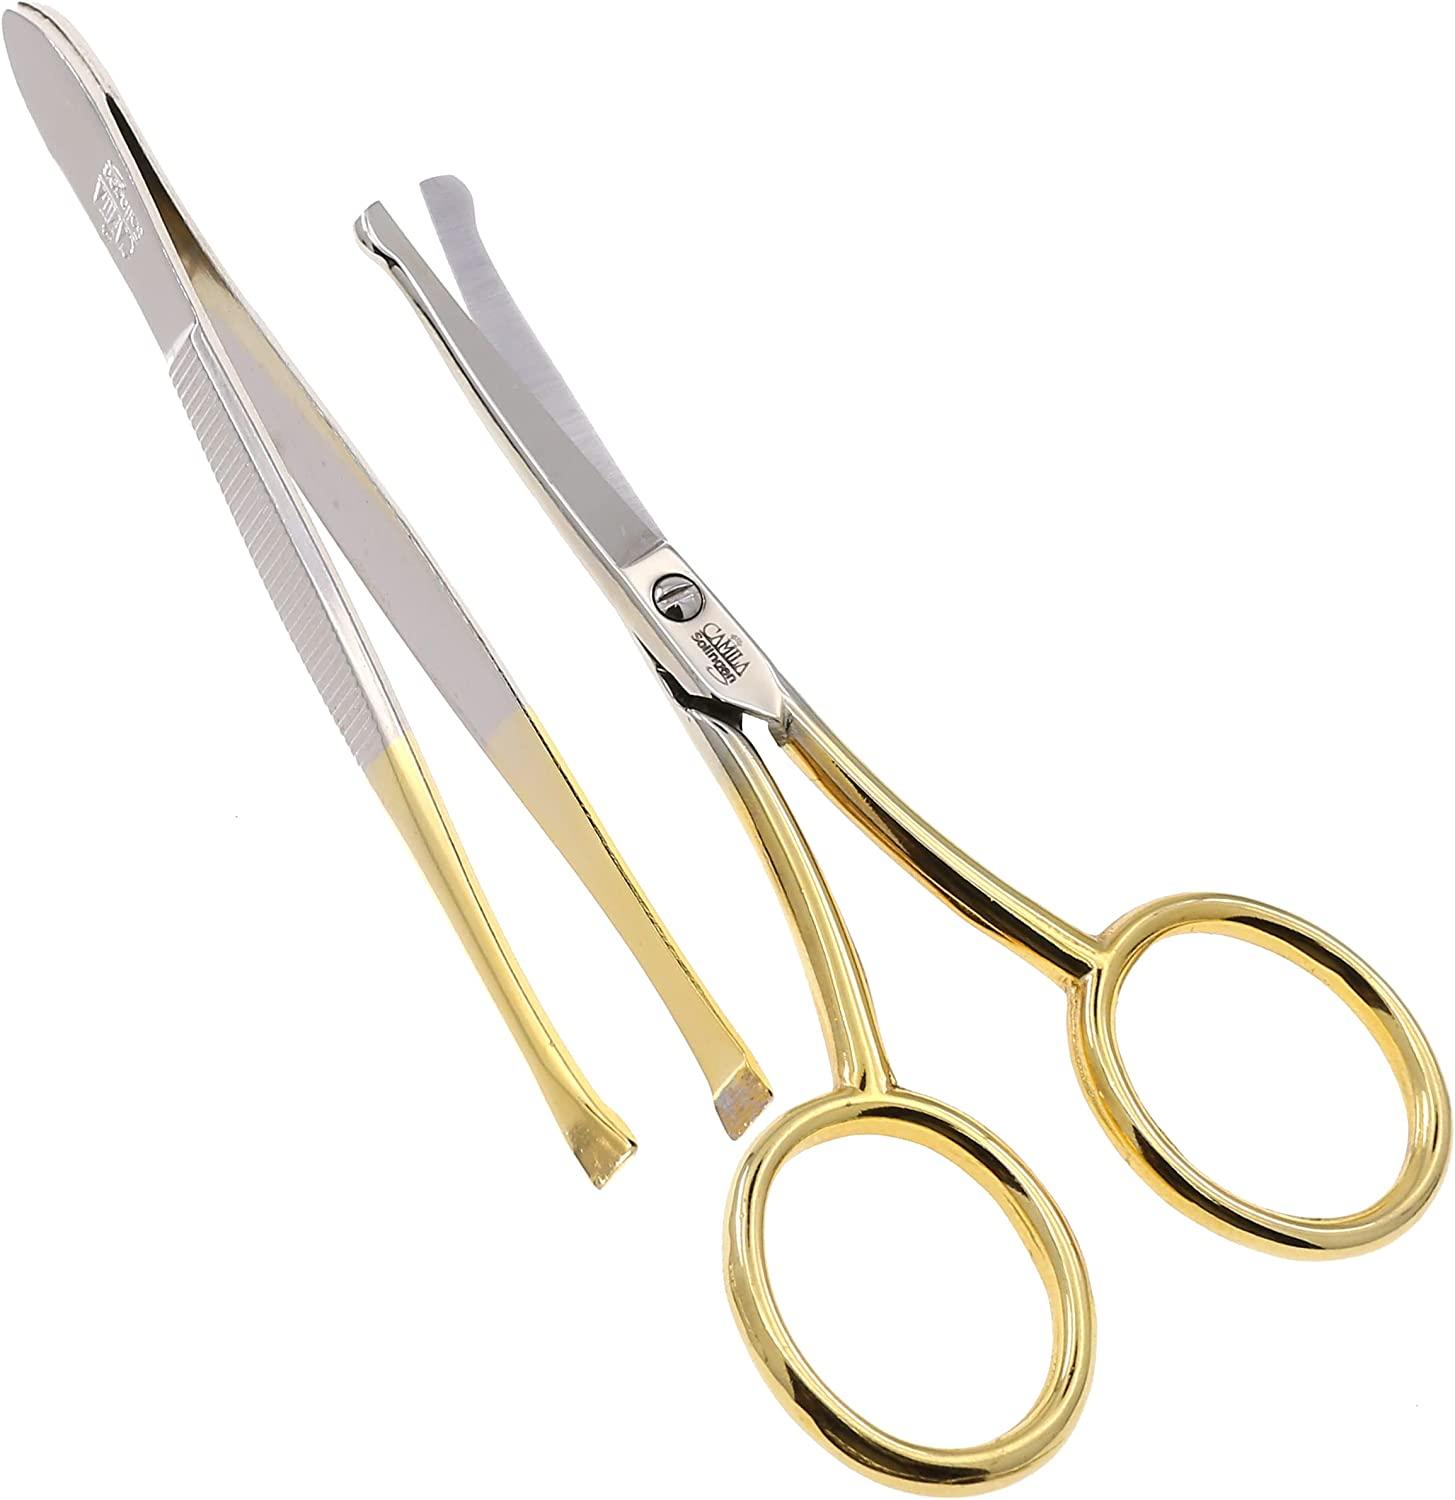 Kershaw Manicure Set Nail Care Slanted Tweezers Facial Hair Scissors R